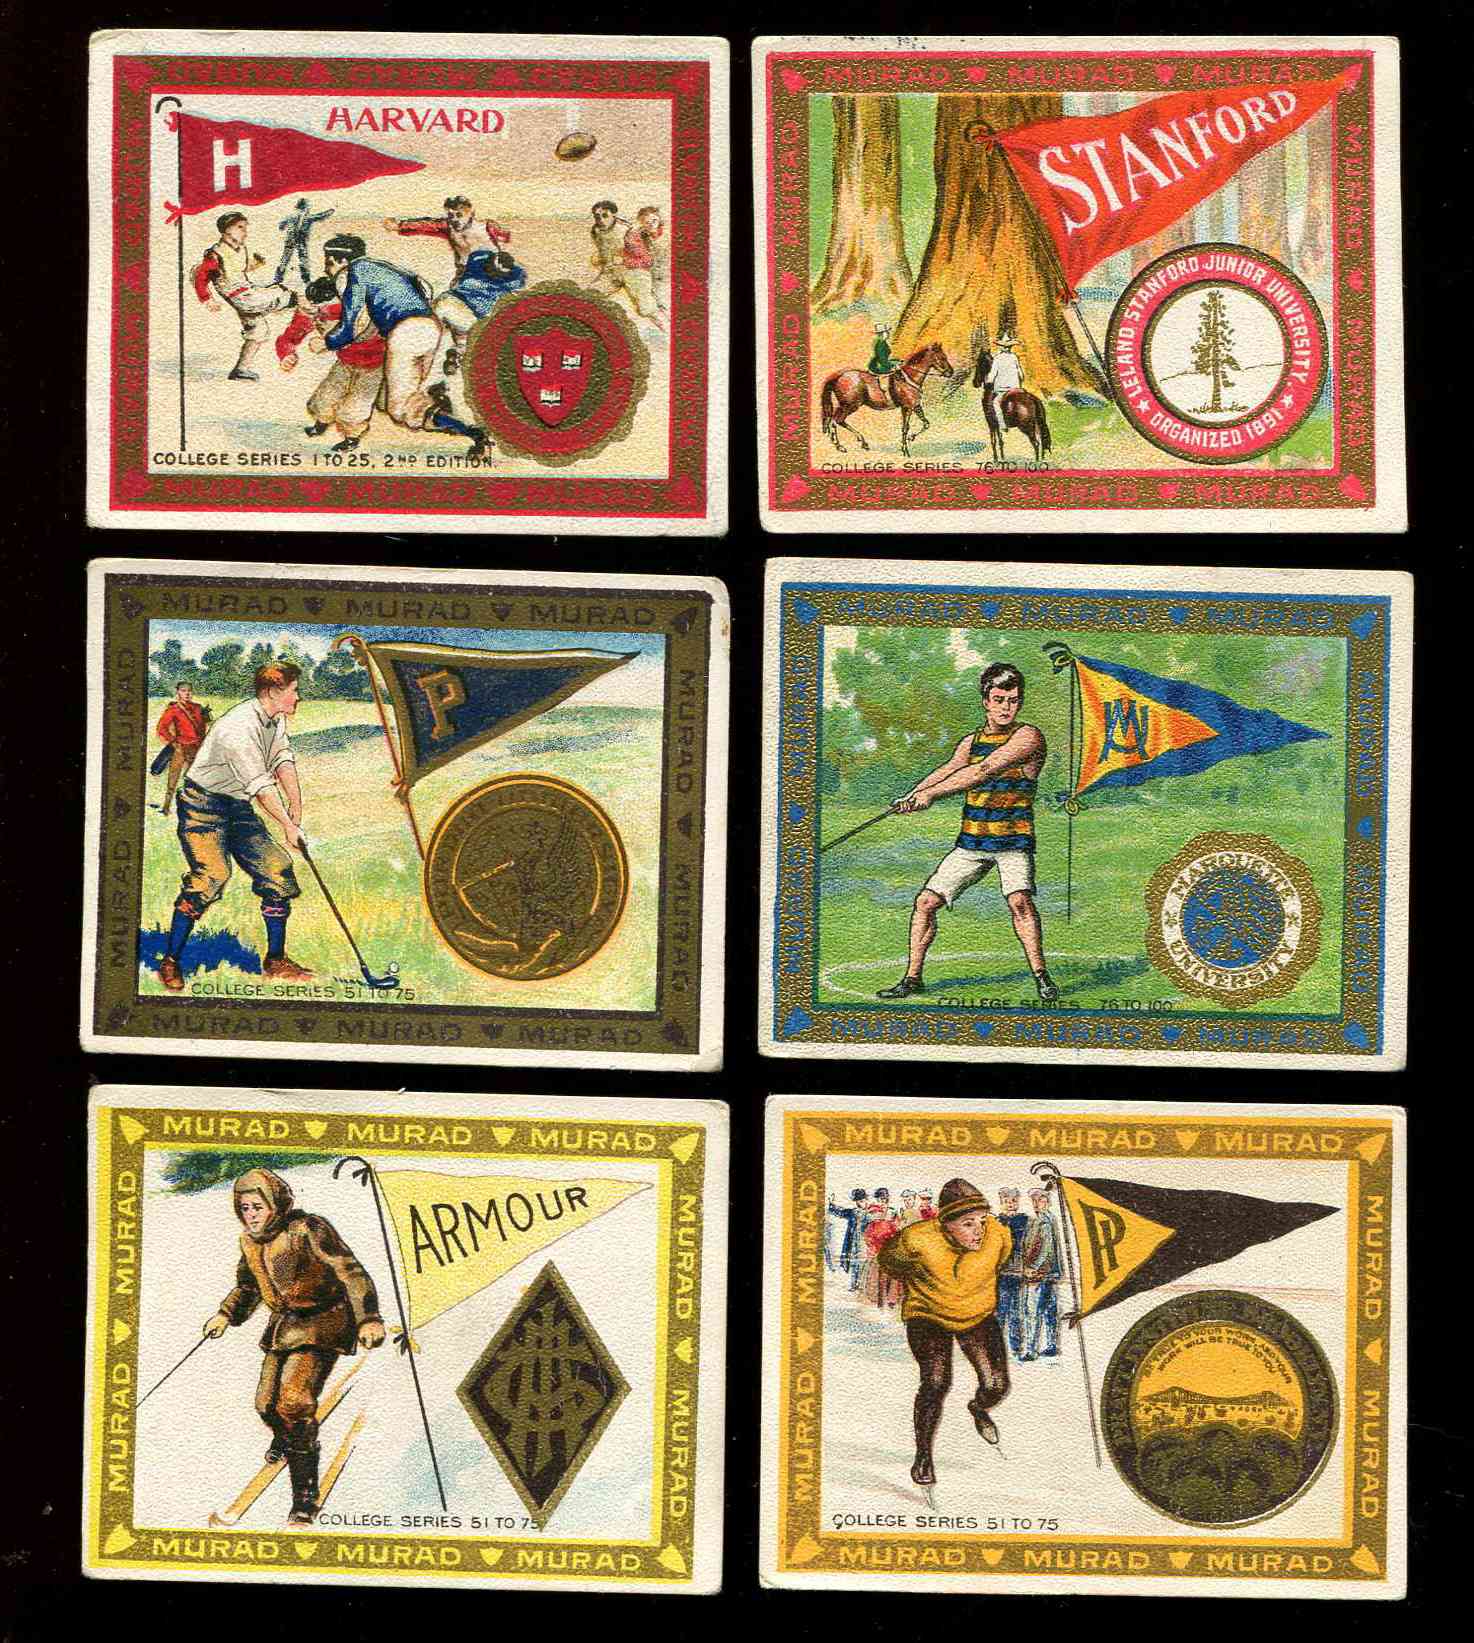 1909-1910 T51 Murad College Series - Pratt Institute Brooklyn NY (Skating) n cards value